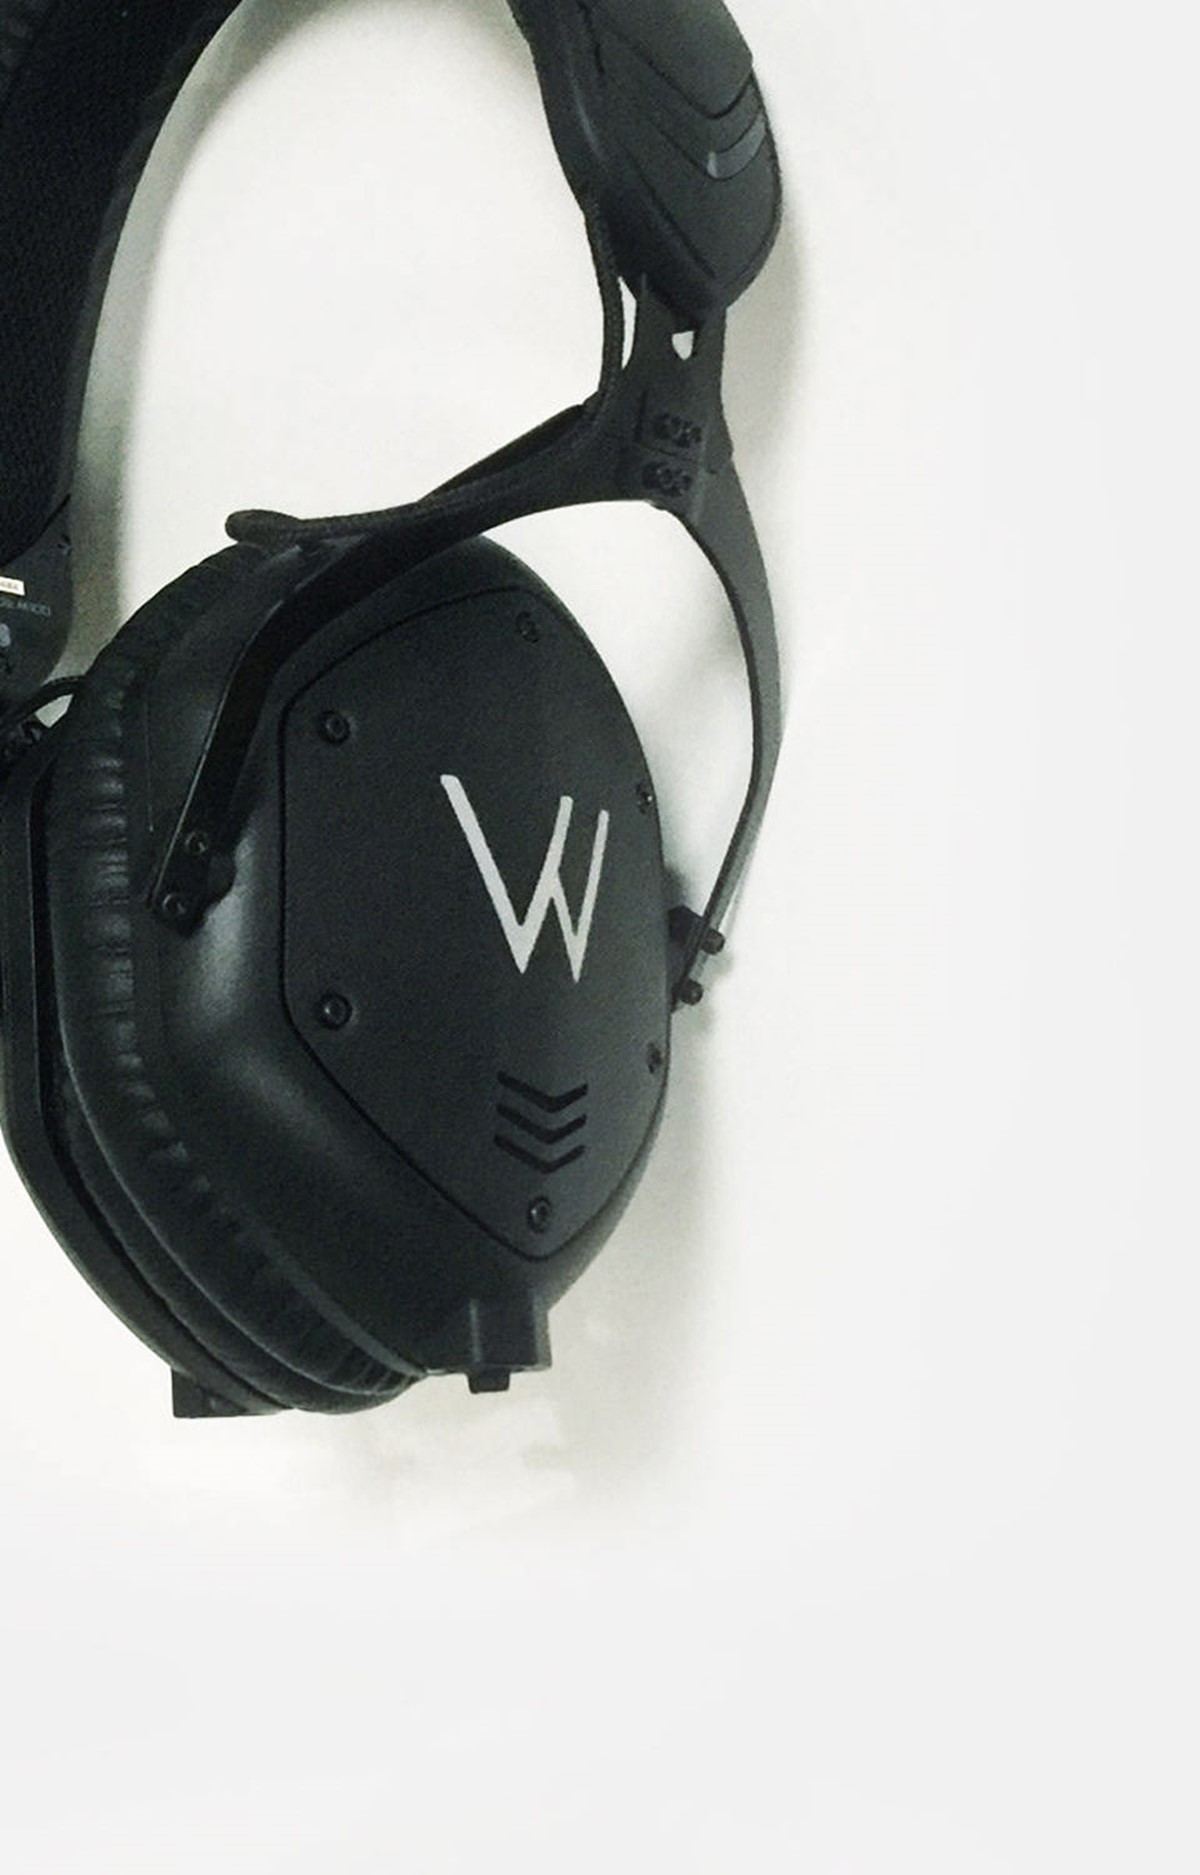 Will Clarke. Branded logo headphones. Brand identity design by Superfried.